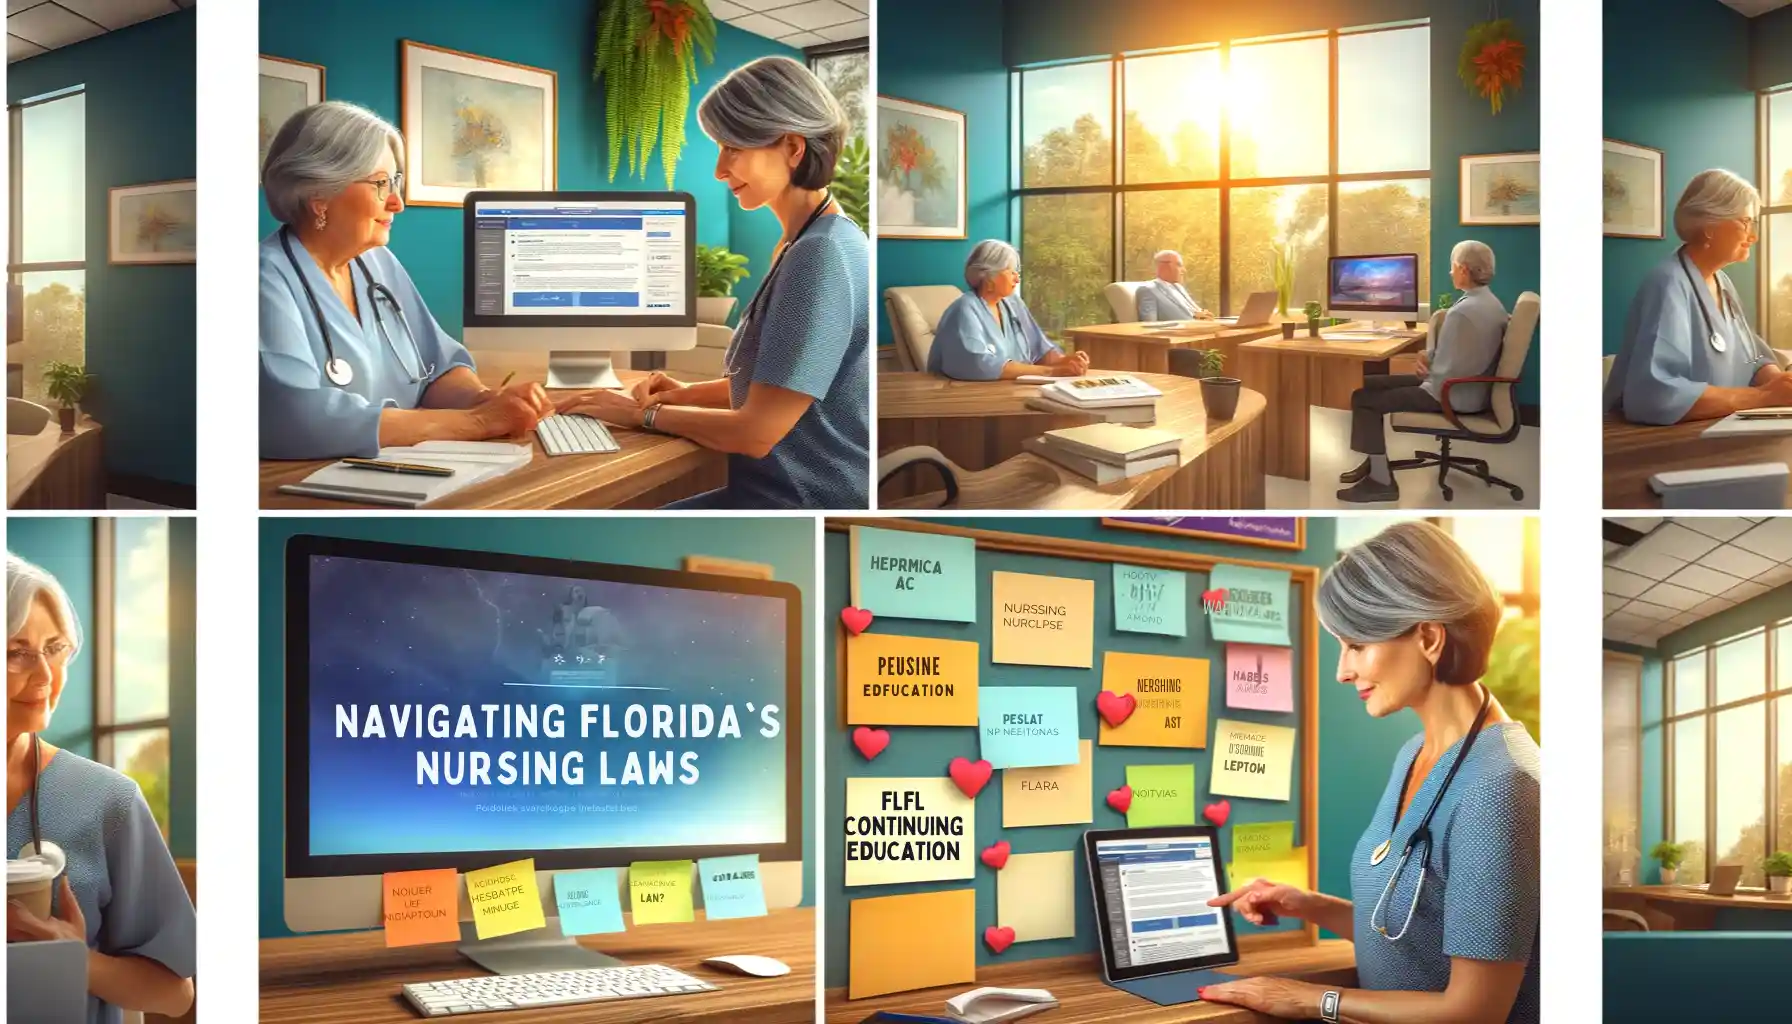 Florida Laws and Rules Course for Nursing Course Description
